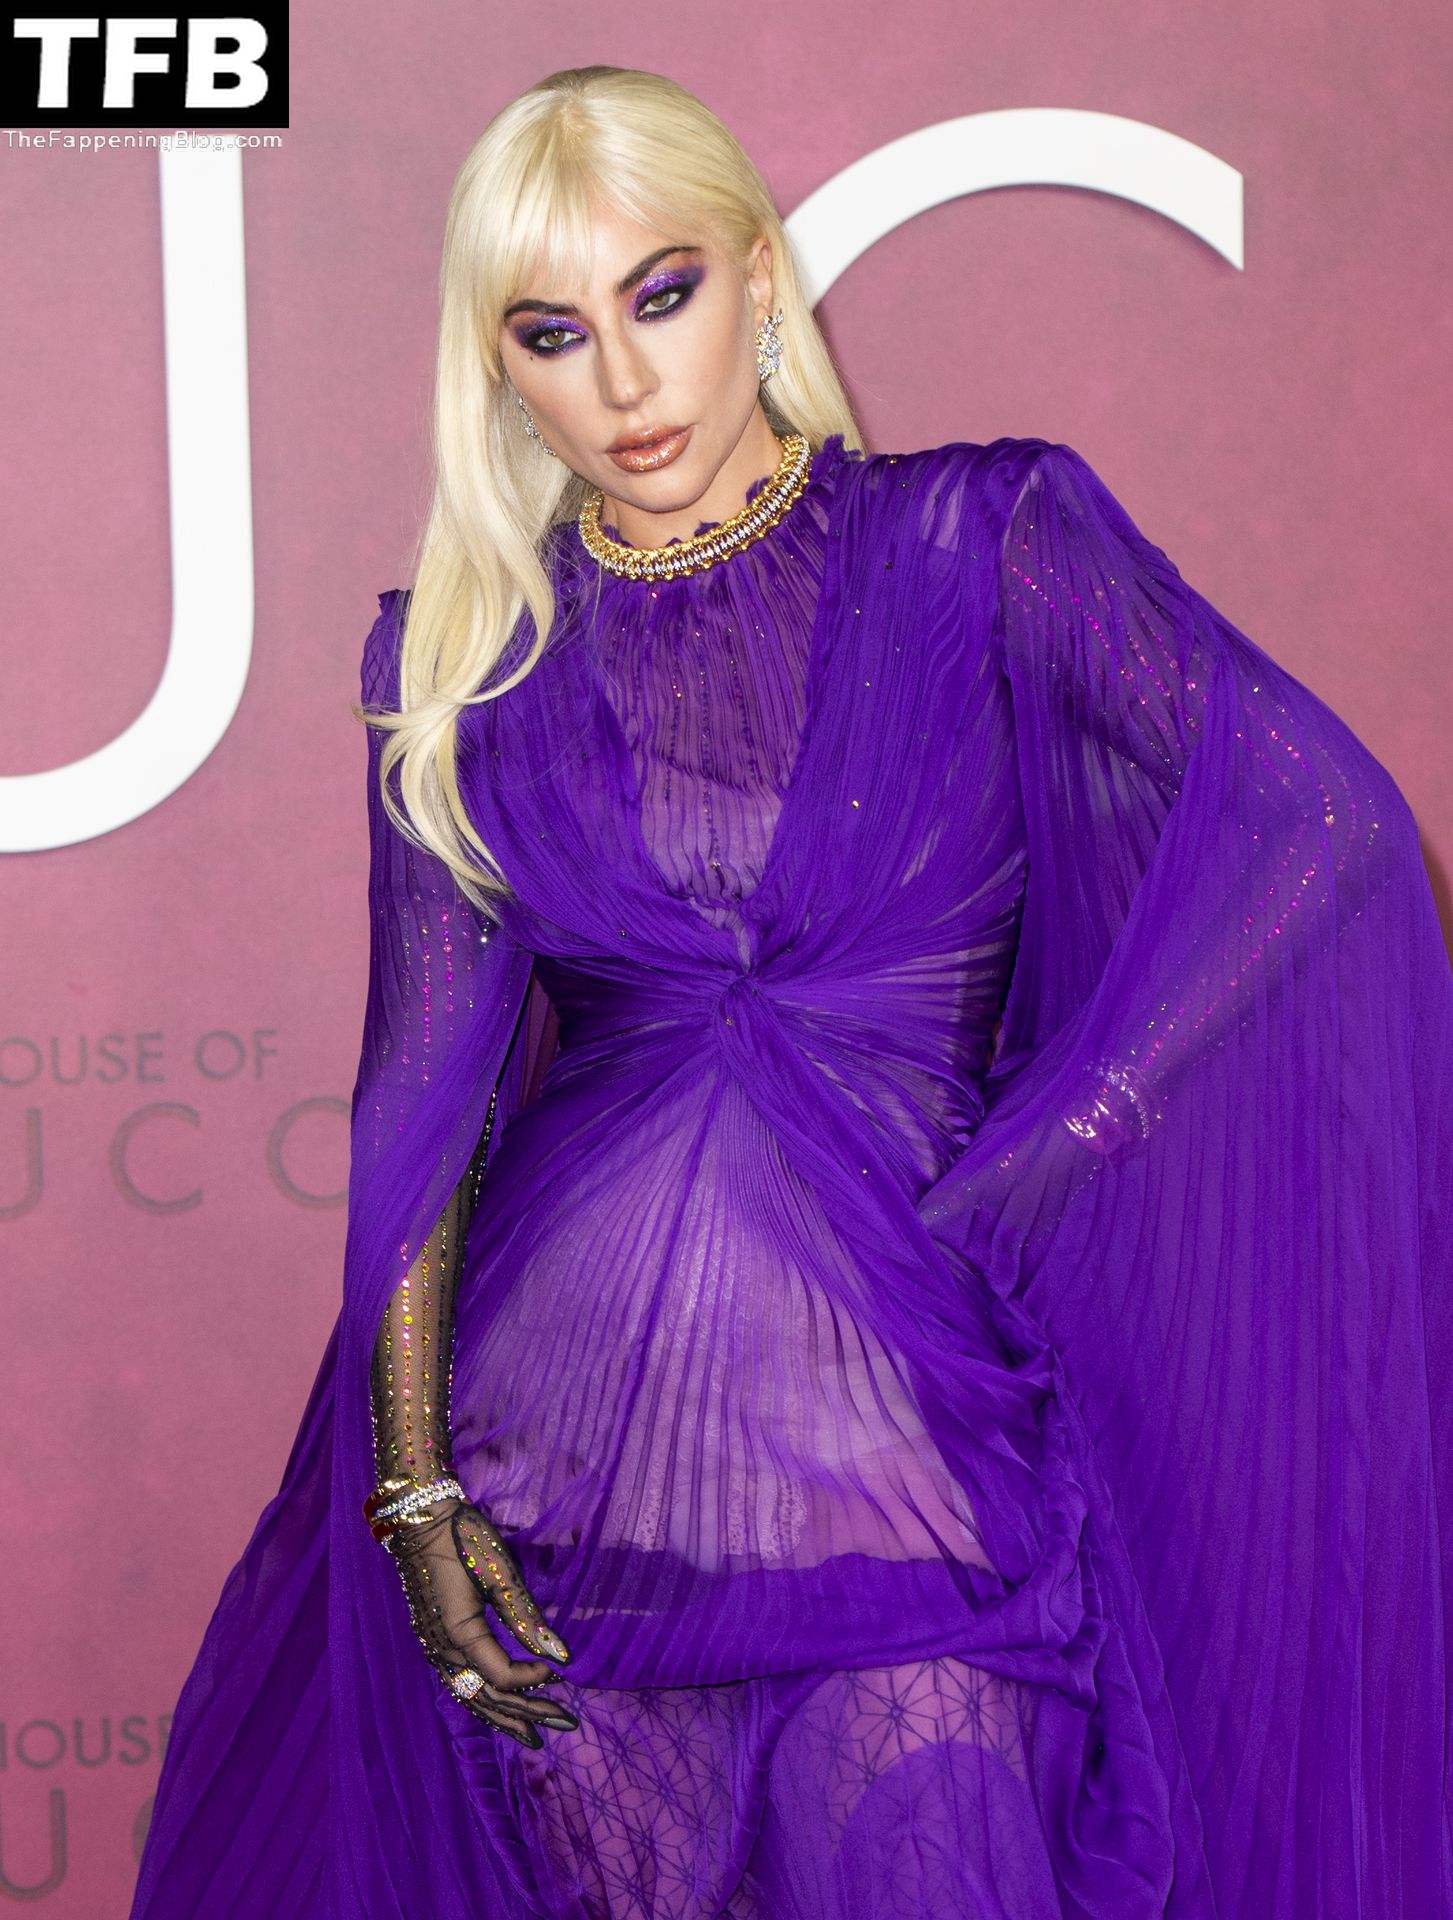 Lady-Gaga-Sexy-The-Fappening-Blog-124.jpg